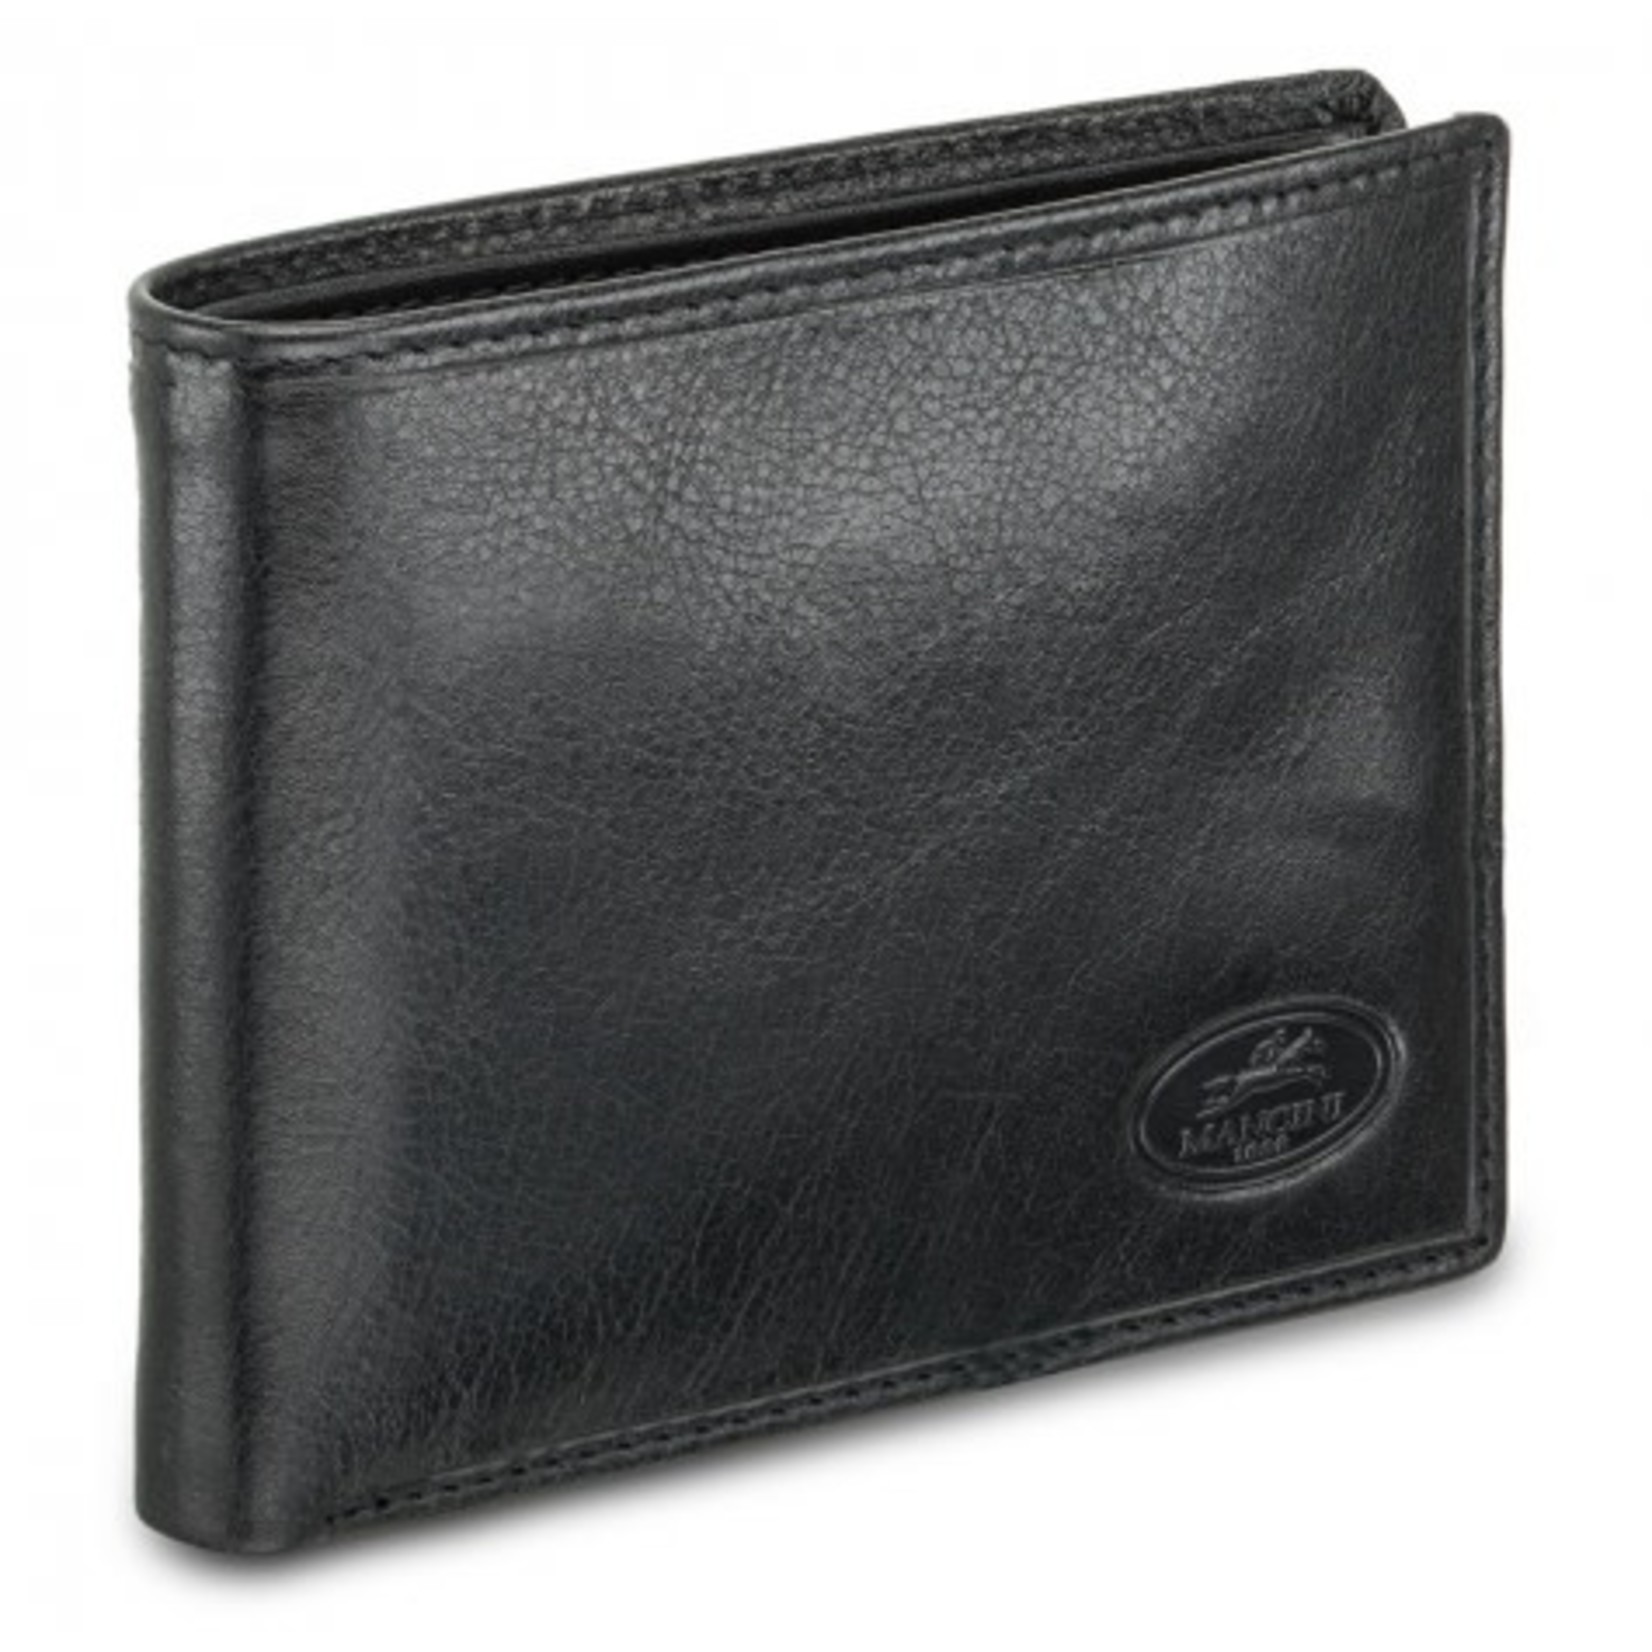 Mancini Men’s RFID Secure Classic Billfold Wallet - Black